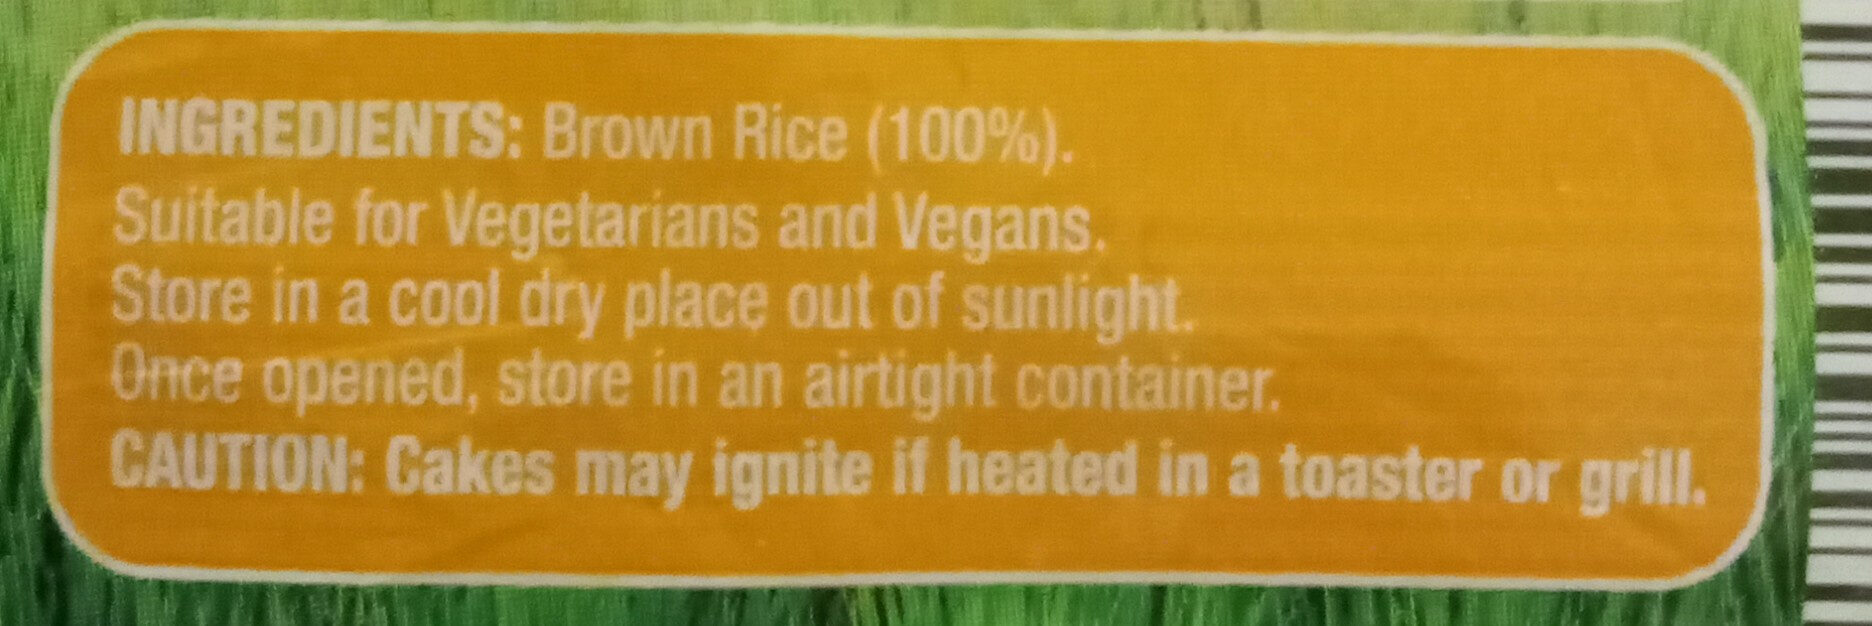 Rice cakes - Ingredients